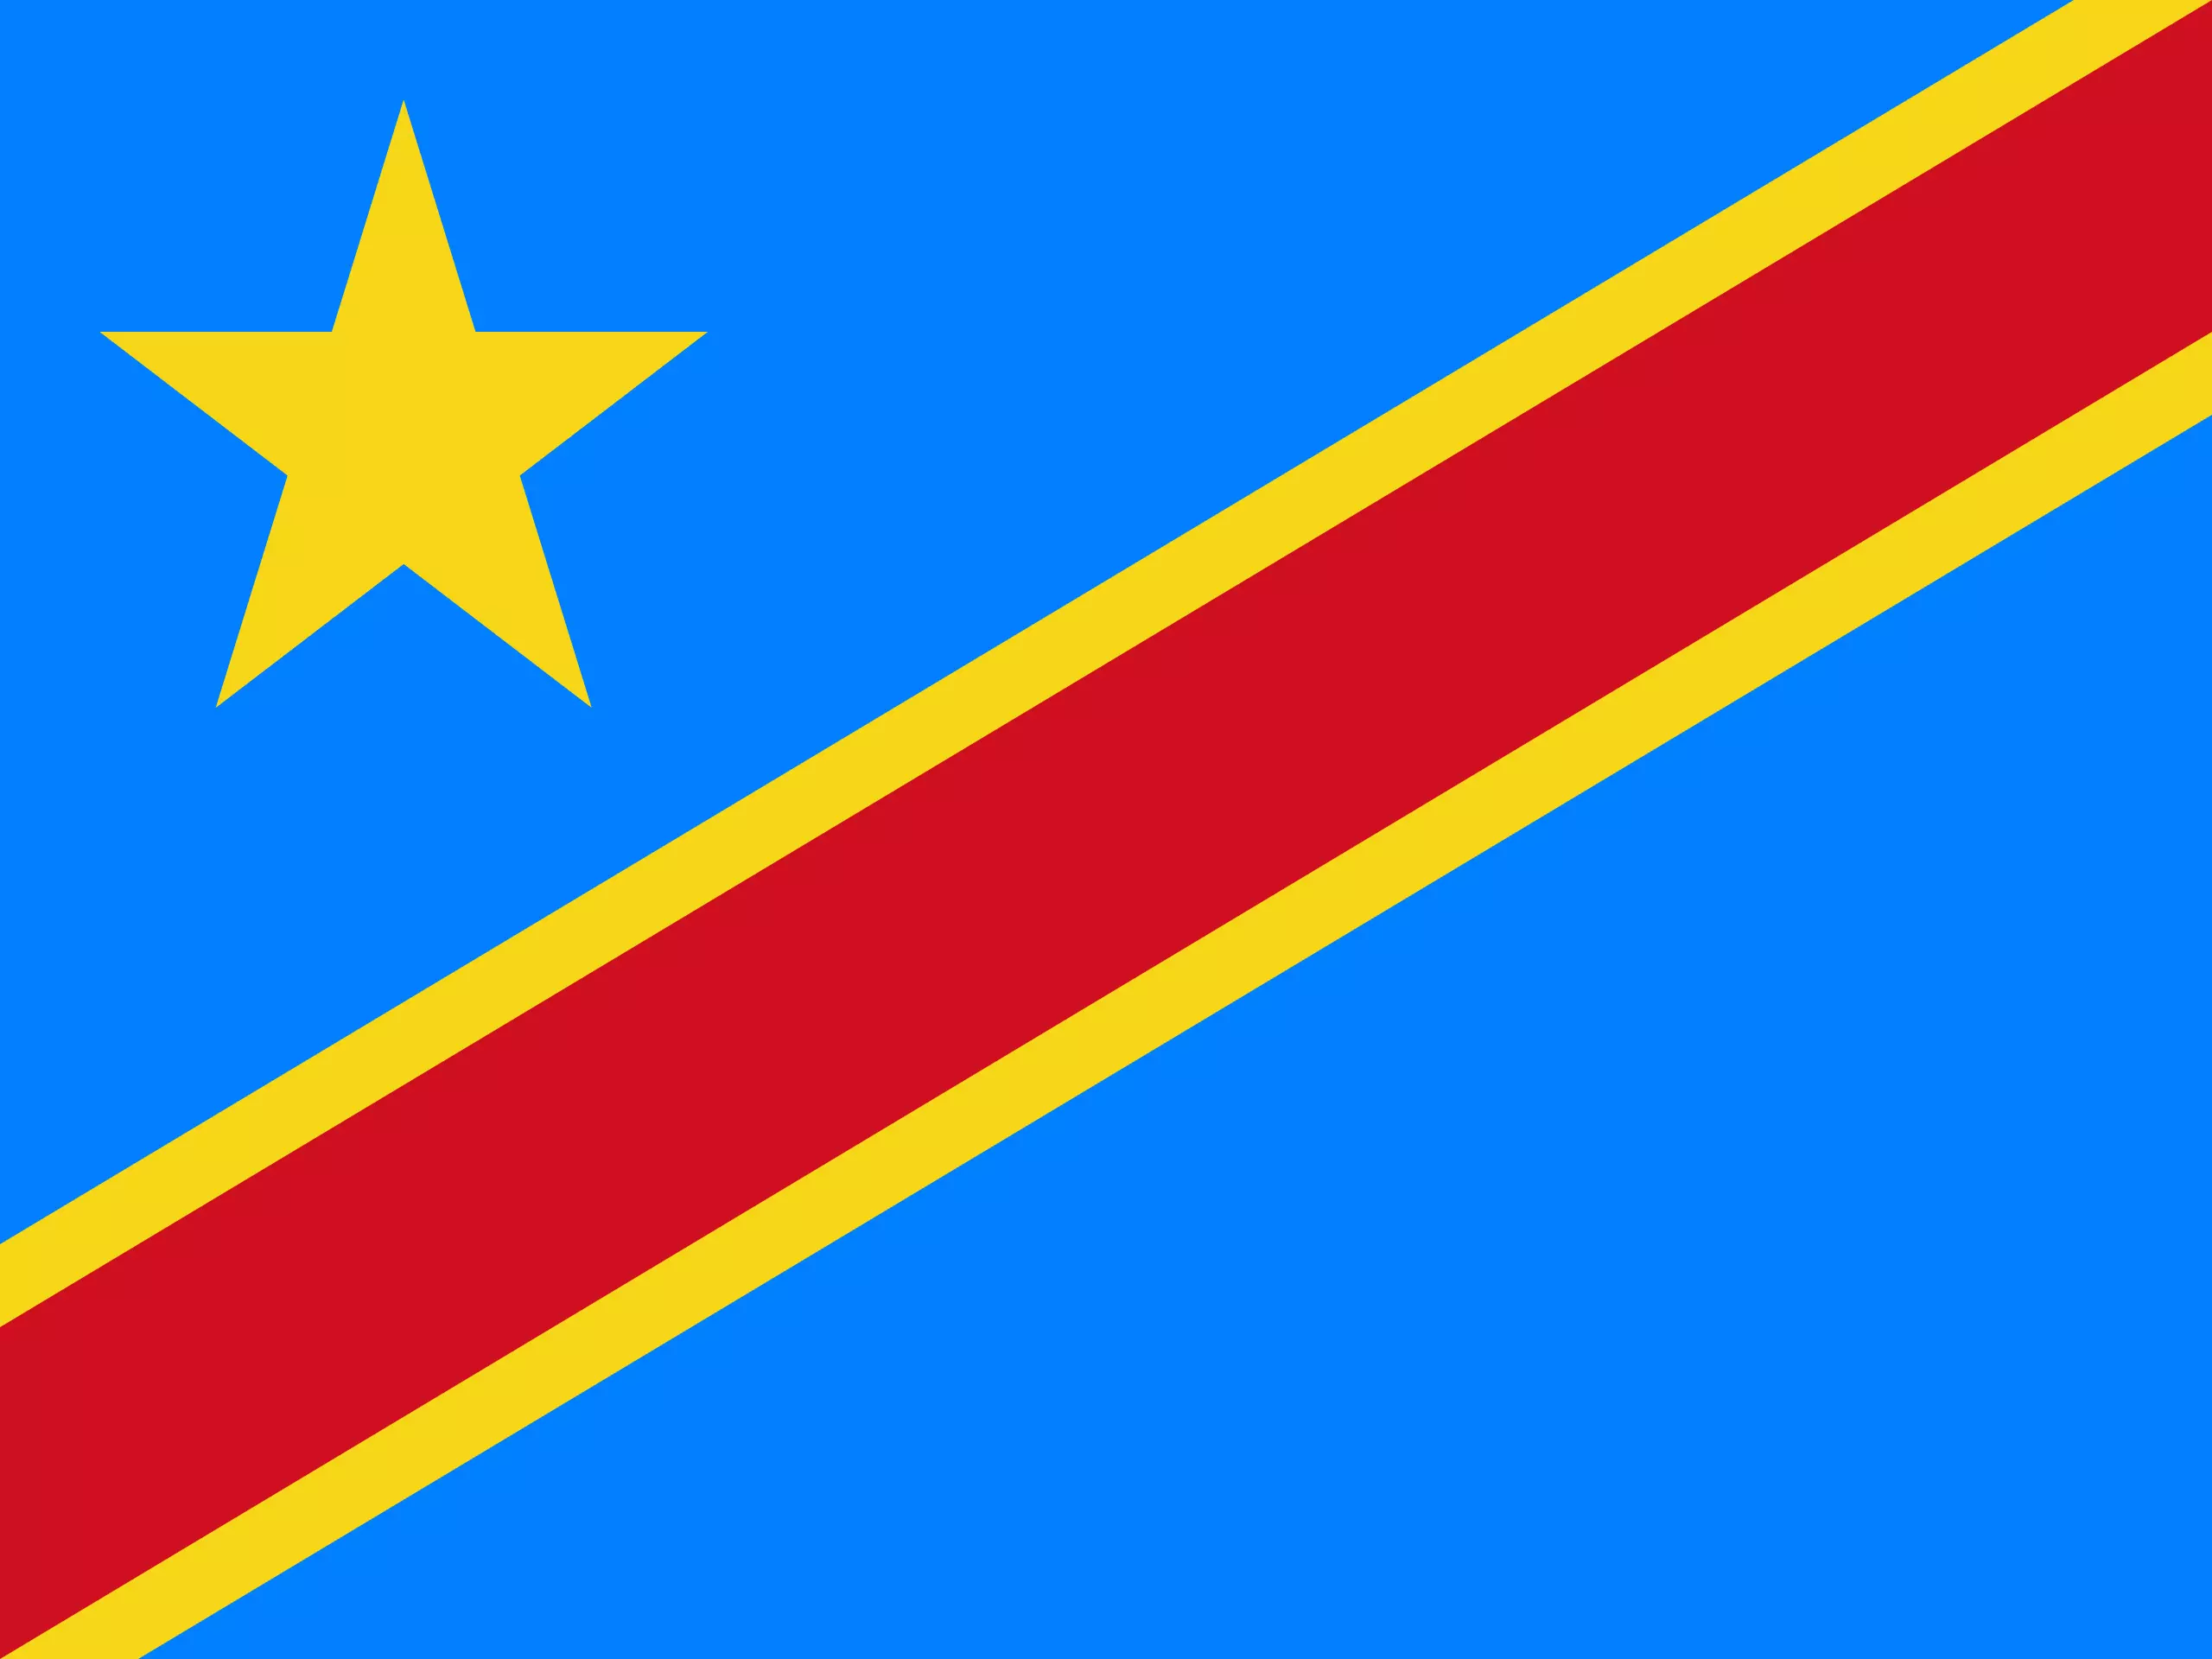 DR Congo set to unveil national carrier - Air Congo